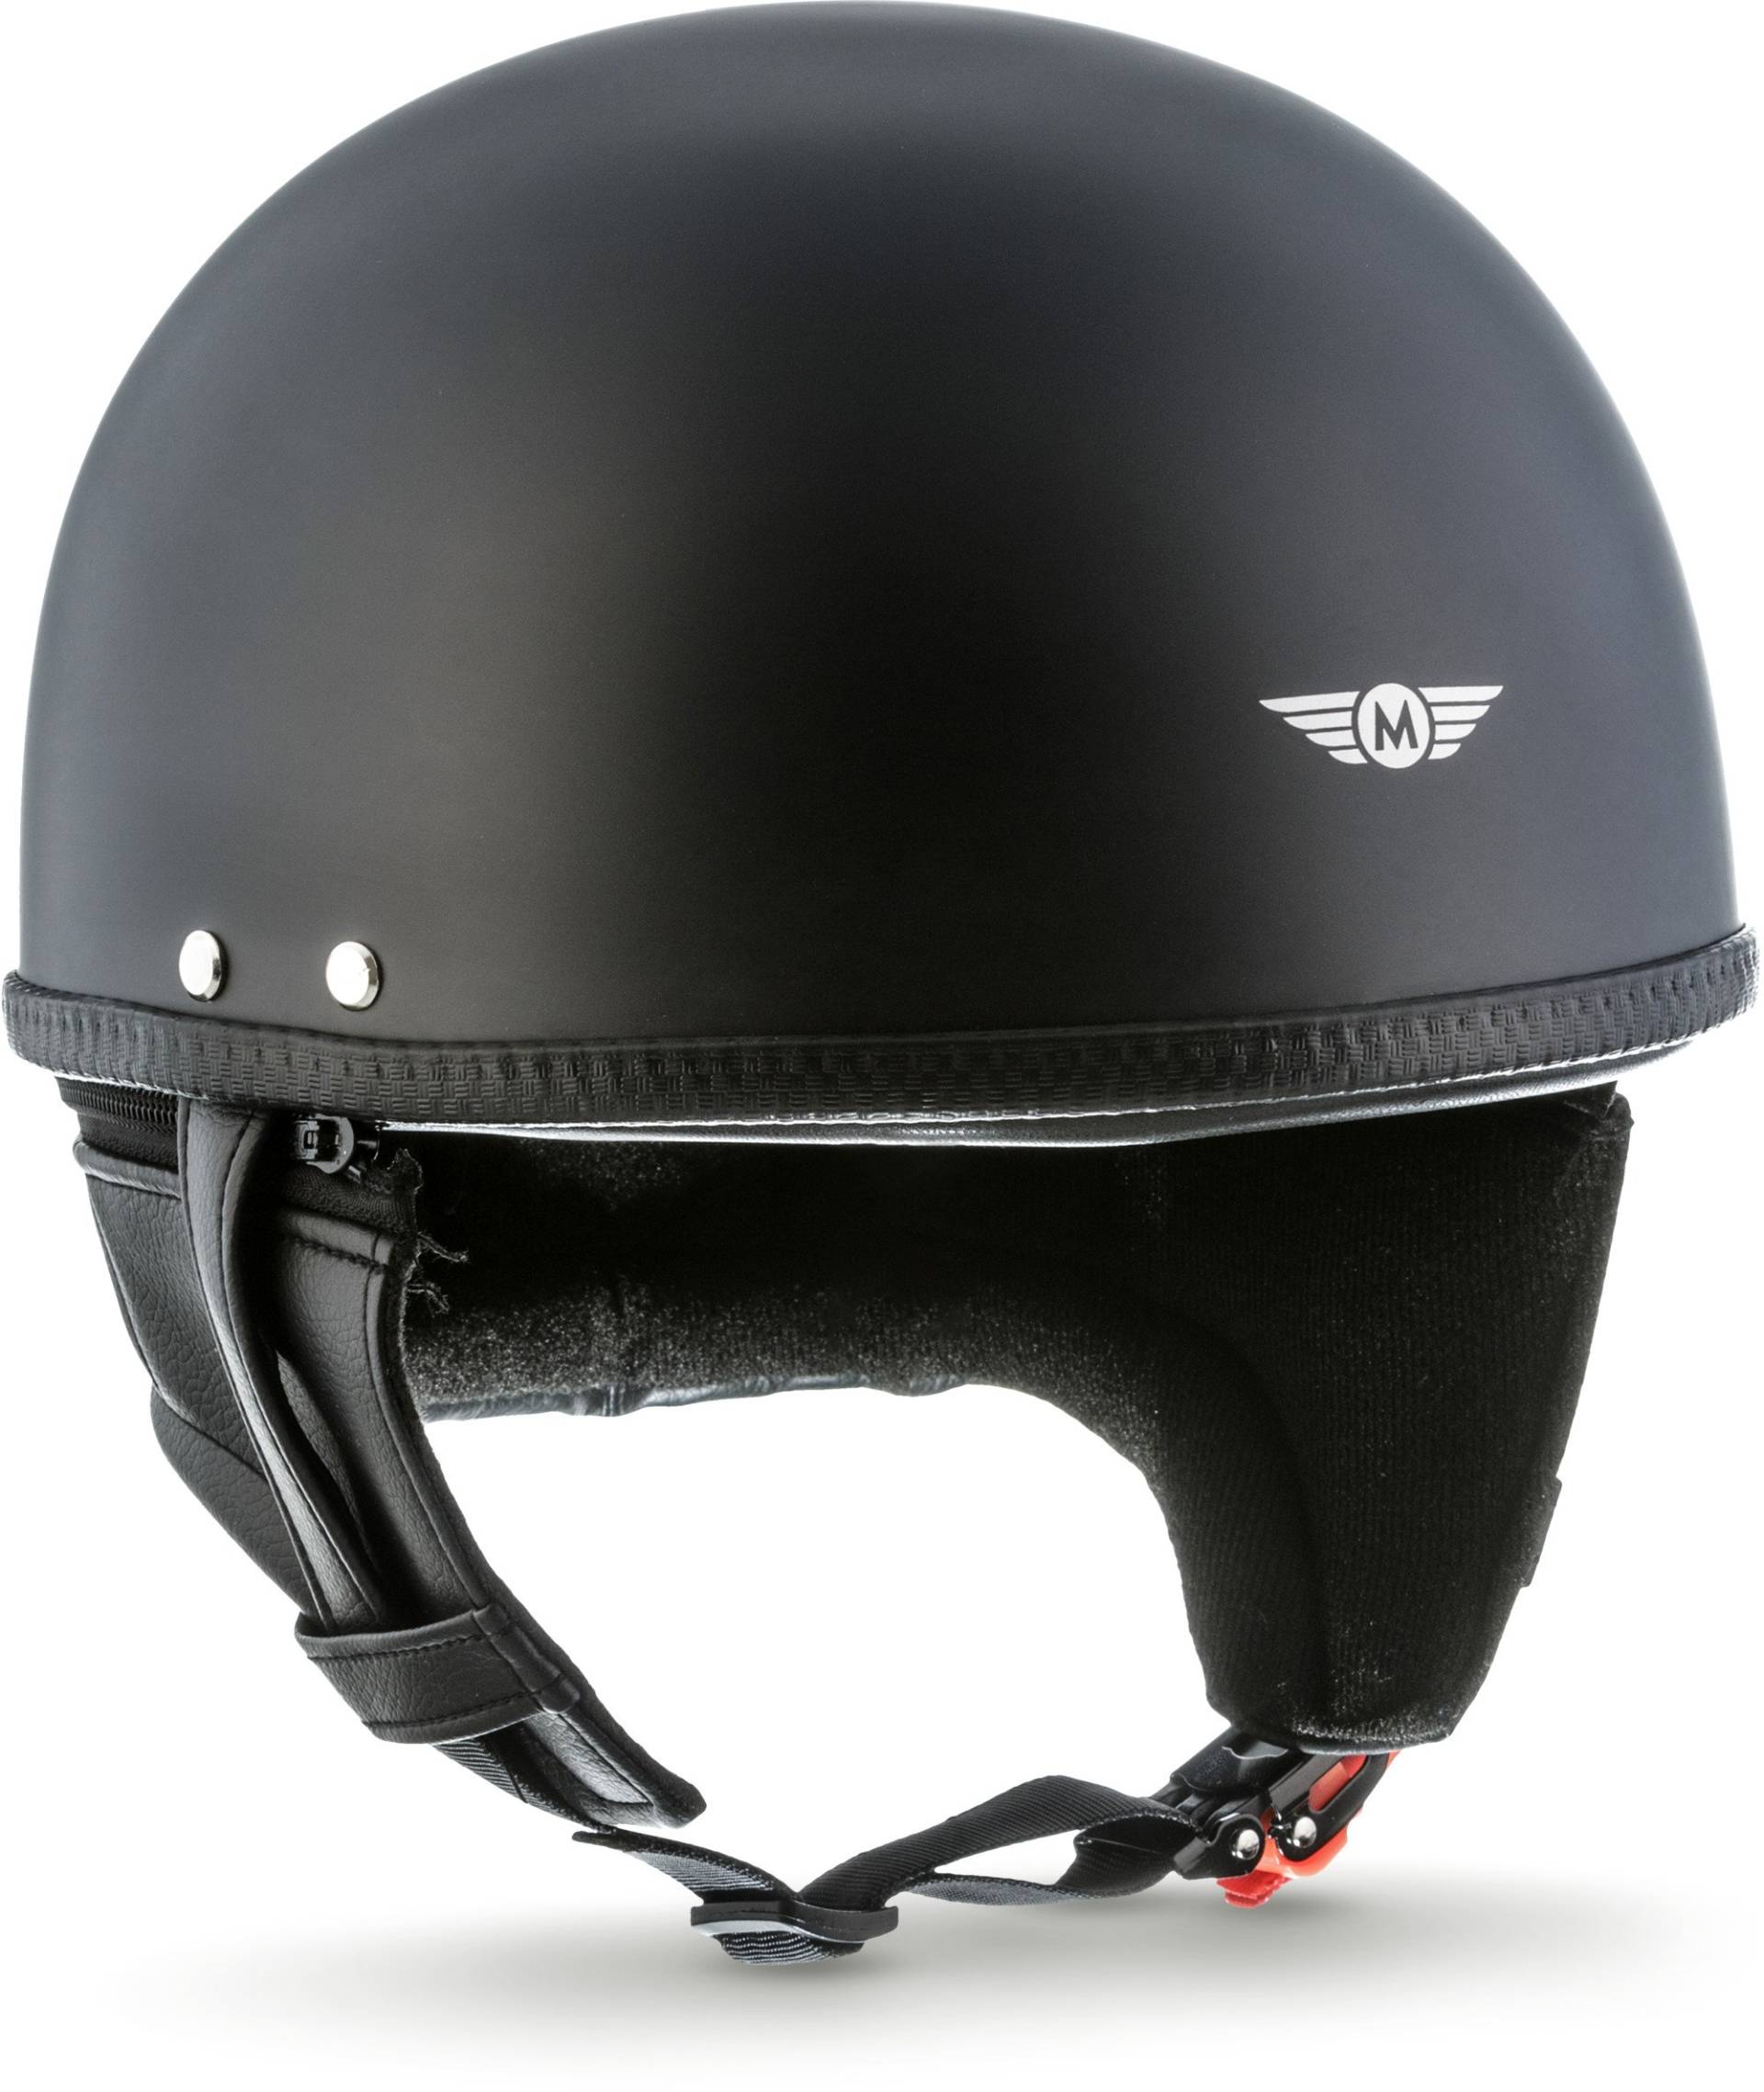 Moto Helmets® D22 „Matt Black“ · Brain-Cap · Halbschale Jet-Helm Motorrad-Helm Roller-Helm · Fiberglas Schnellverschluss SlimShell Tasche M (57-58cm) von Moto Helmets